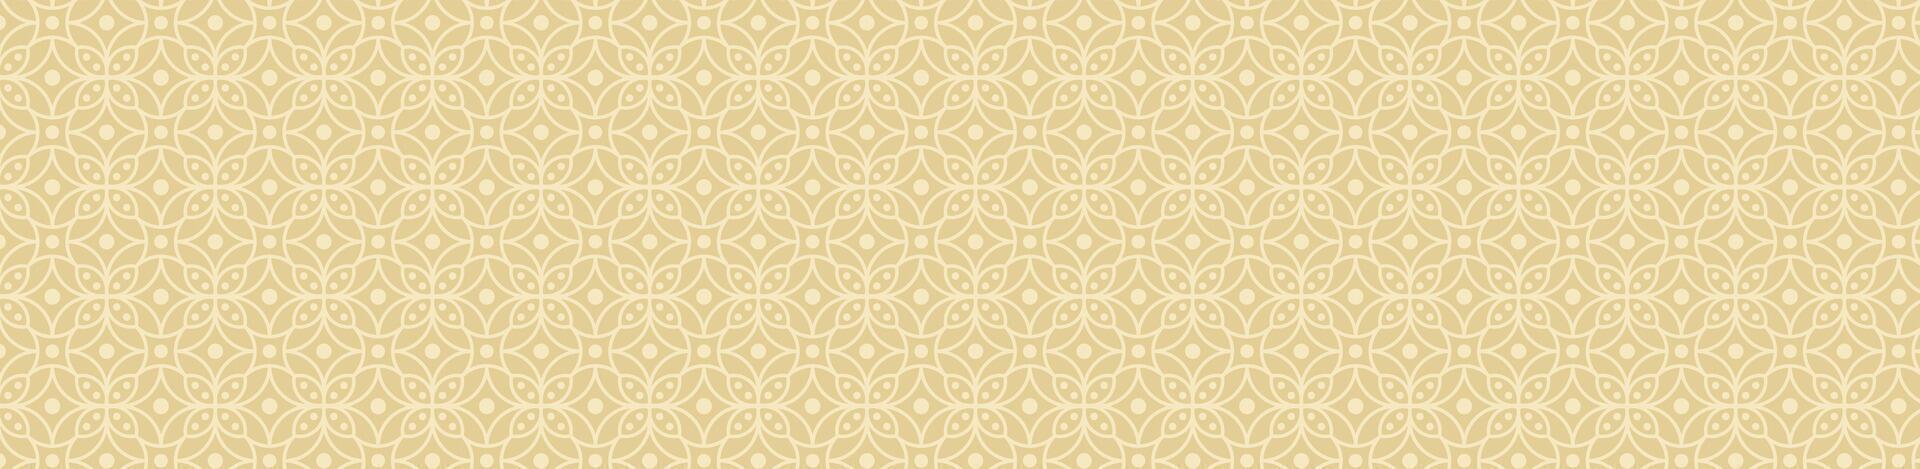 seamless fabric pattern islamic ramadan ornamental vintage background vector